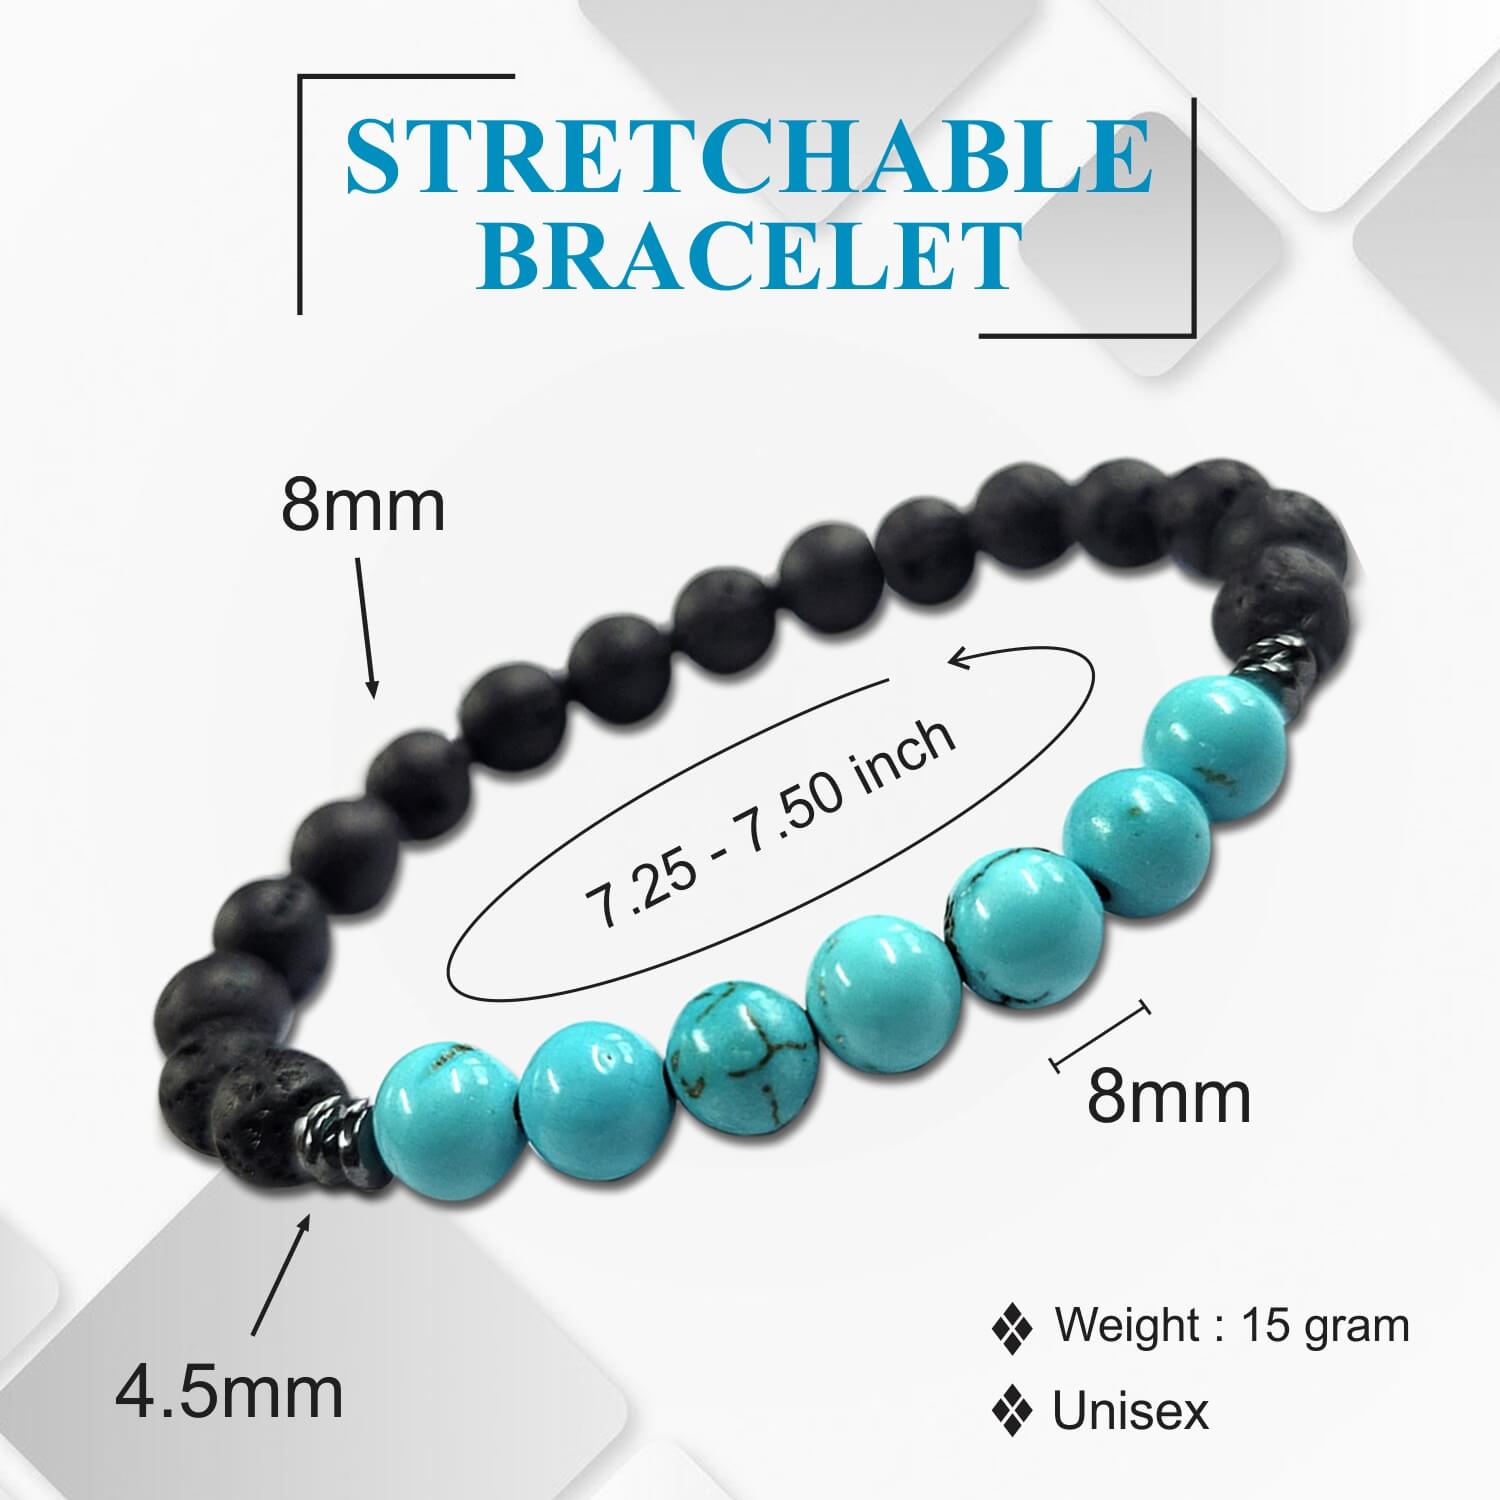 Turquoise (Firoza) Beads Bracelet